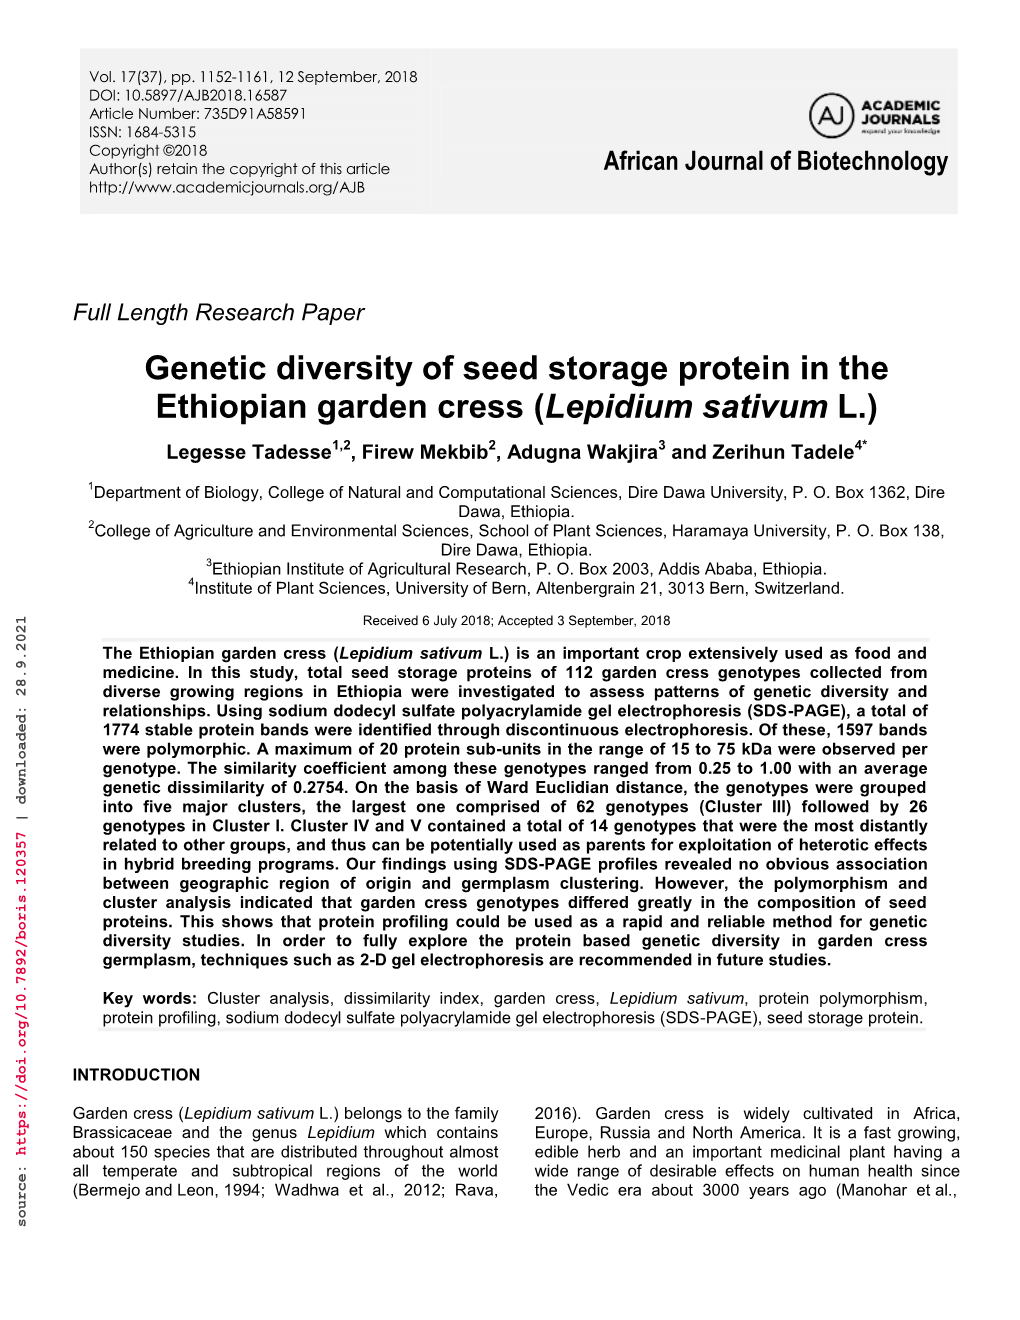 Genetic Diversity of Seed Storage Protein in the Ethiopian Garden Cress (Lepidium Sativum